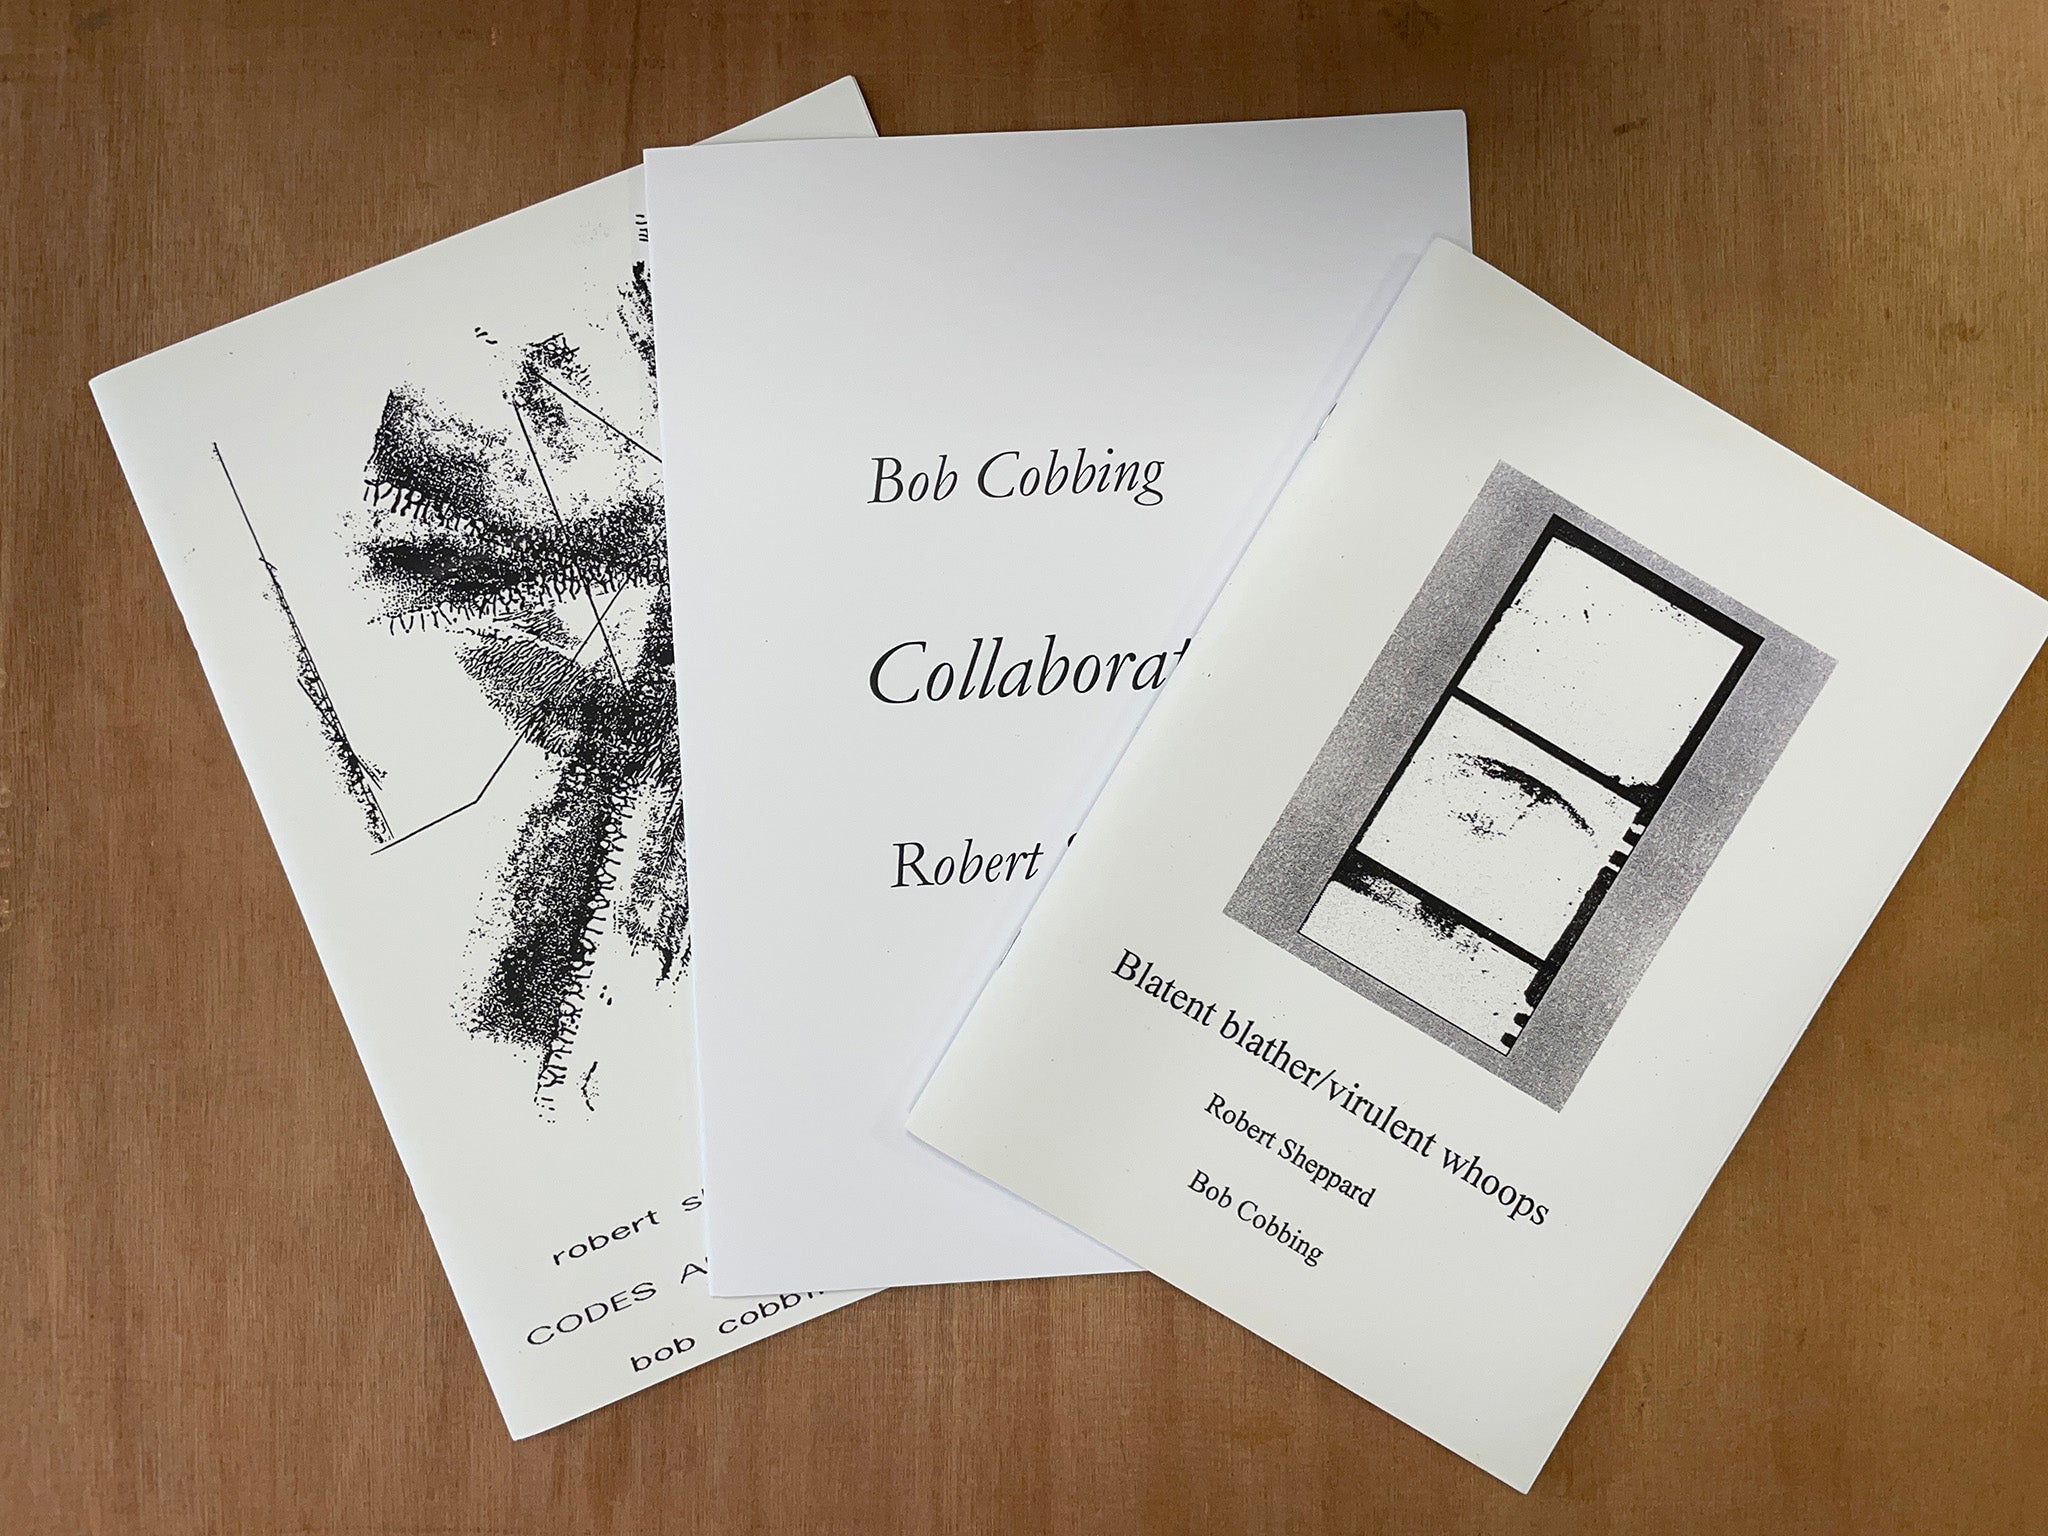 COLLABORATIONS by Bob Cobbing & Robert Sheppard